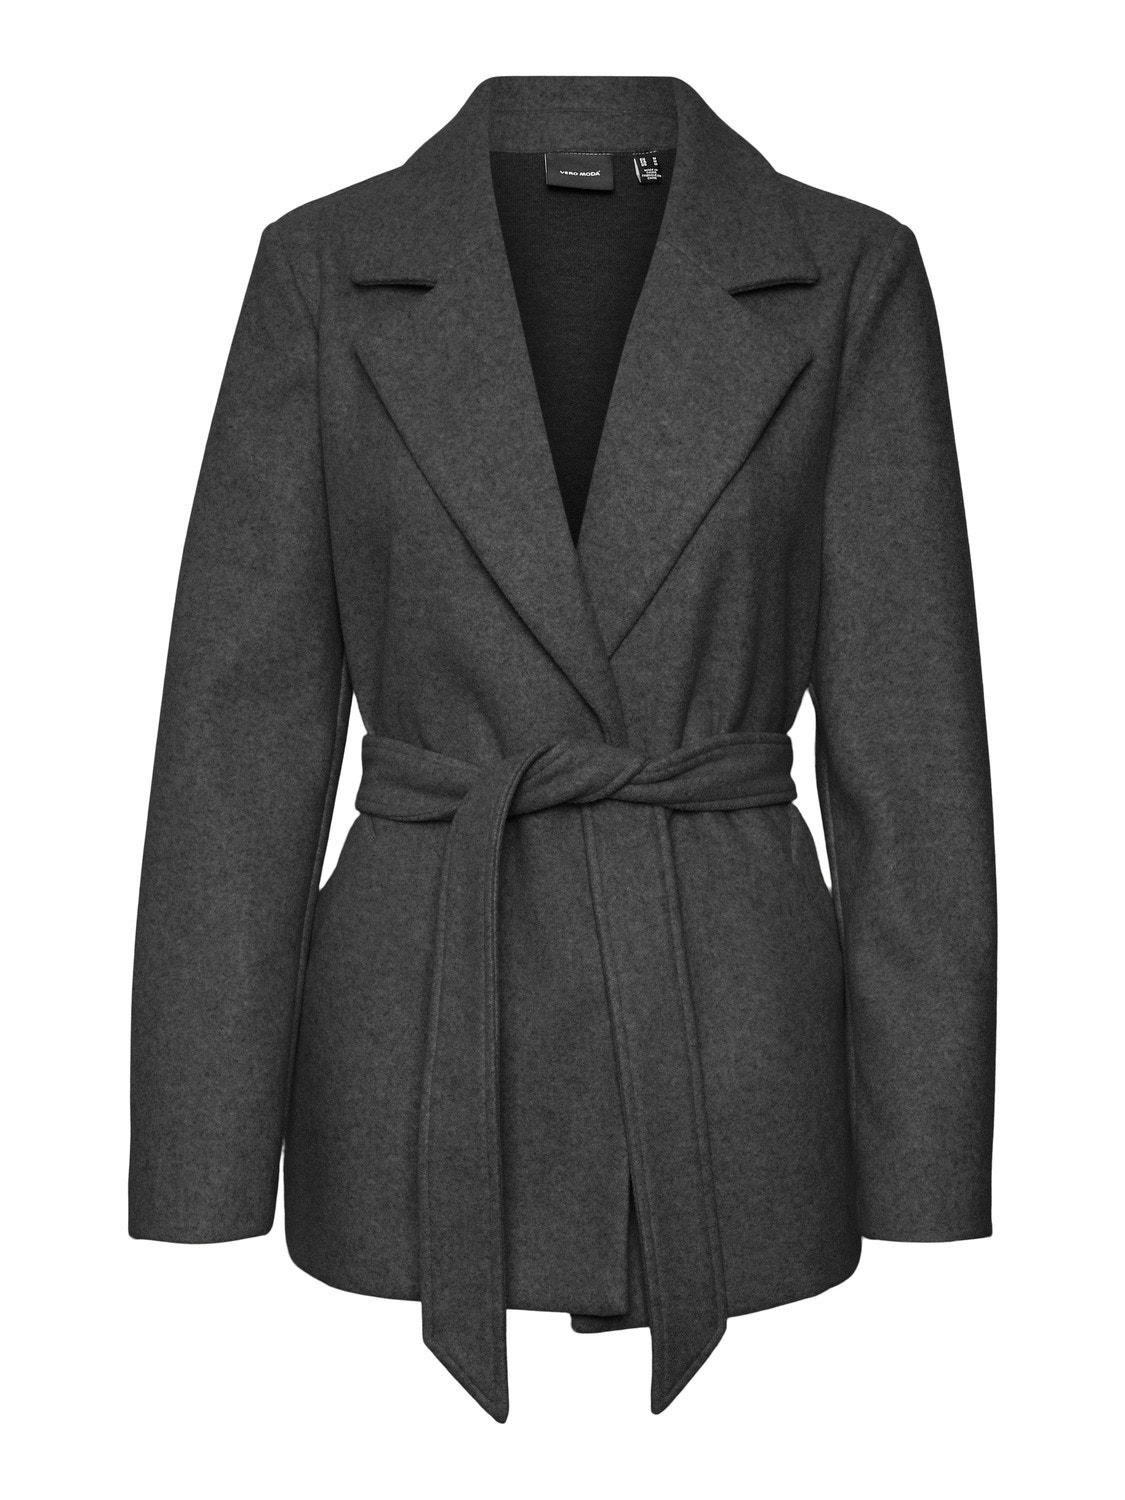 Vero Moda VMFORTUNEAYA Jacket -Dark Grey Melange - 10315214